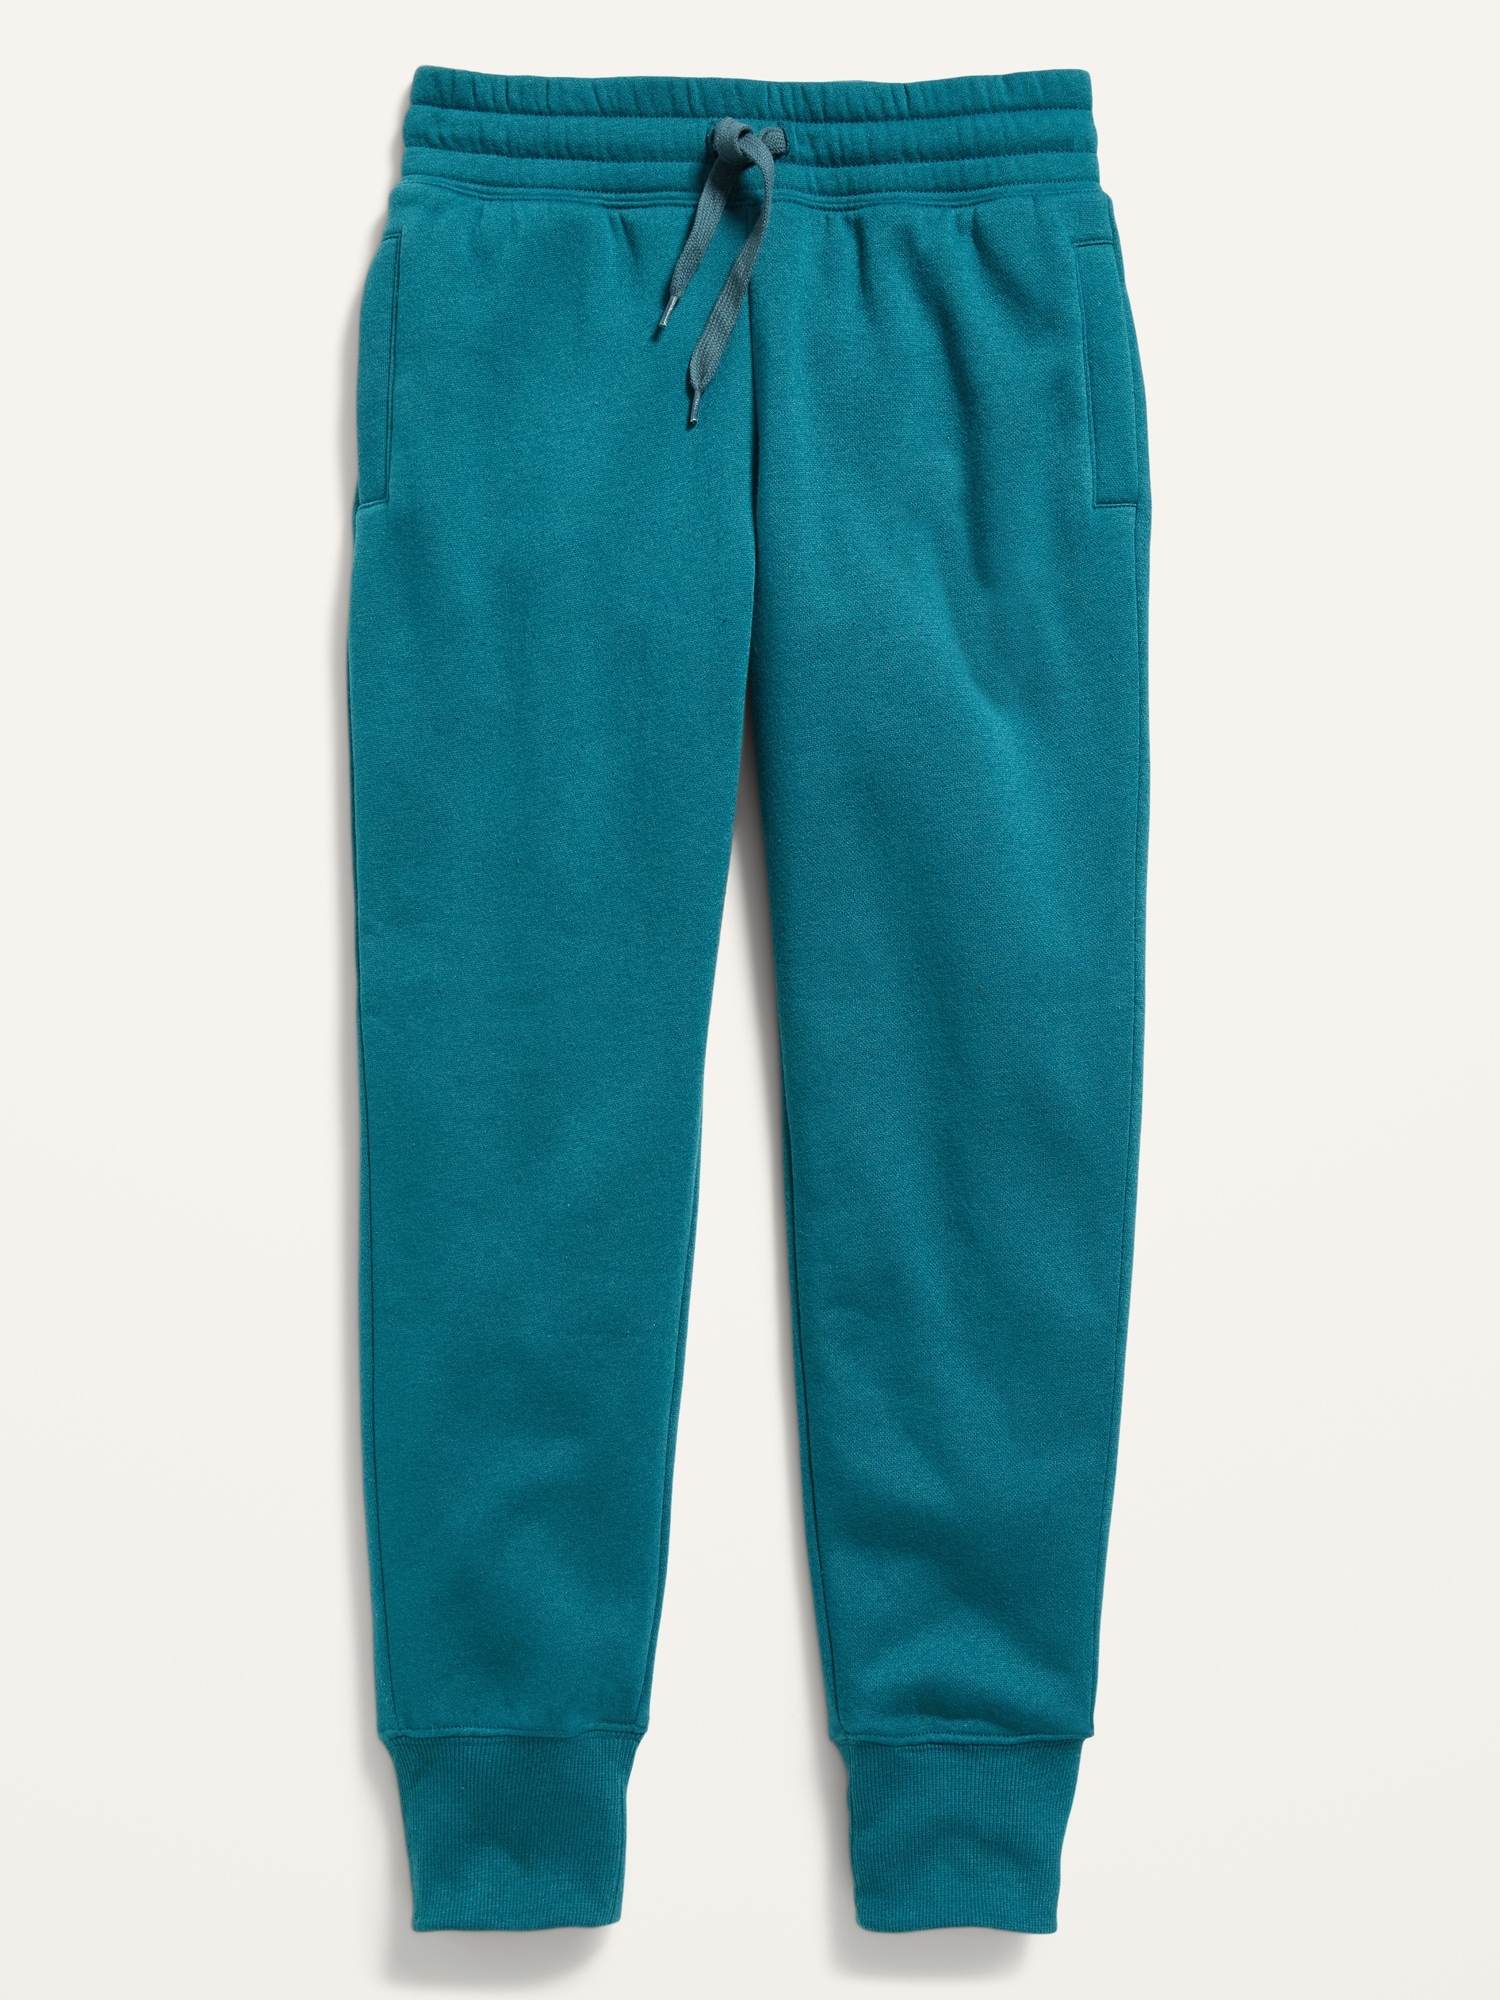 Vintage High-Waisted Jogger Sweatpants for Girls | Old Navy